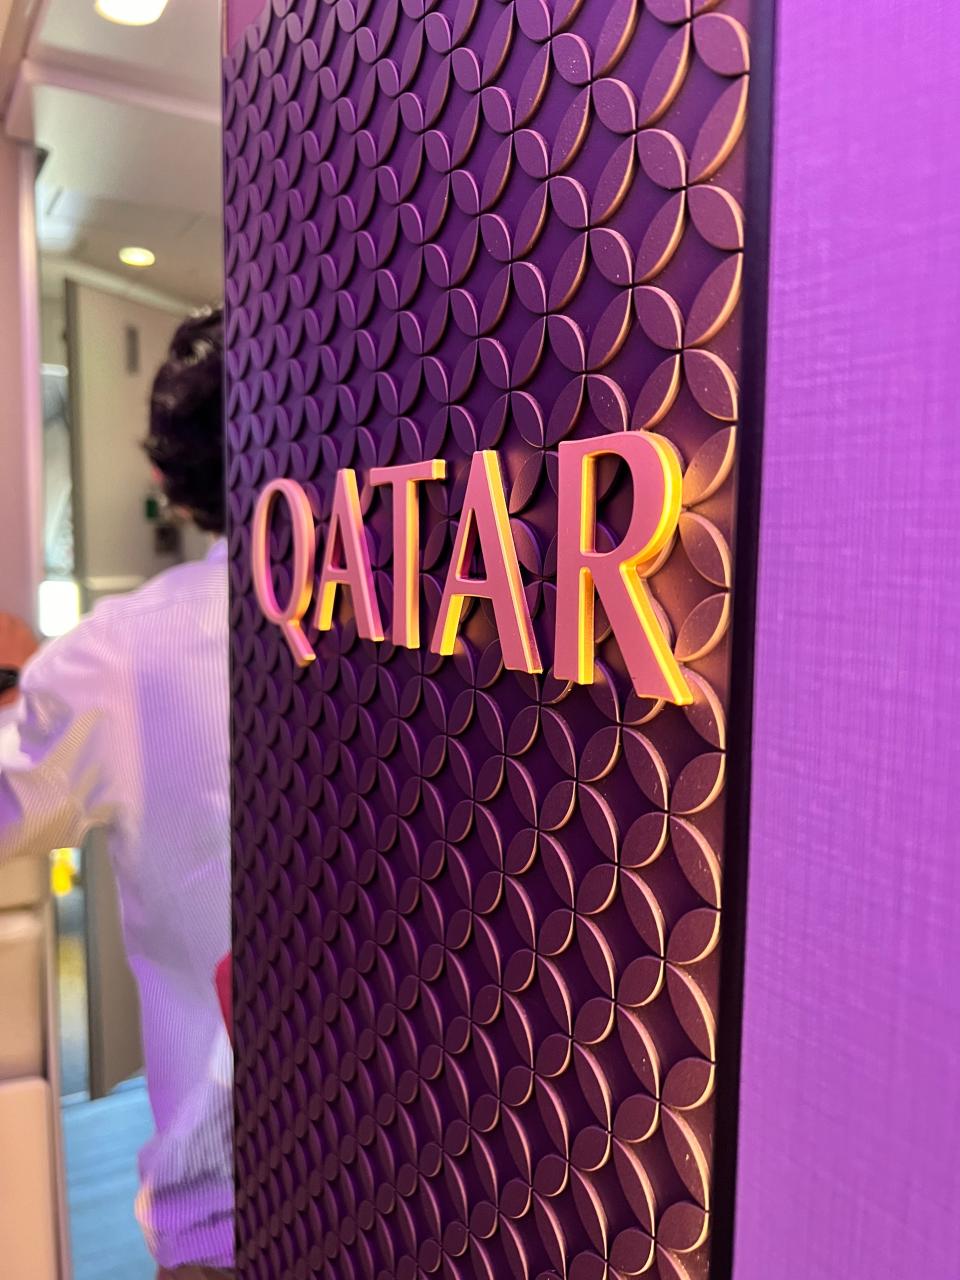 A closeup of the Qatar Airways logo against an ornate brown background.